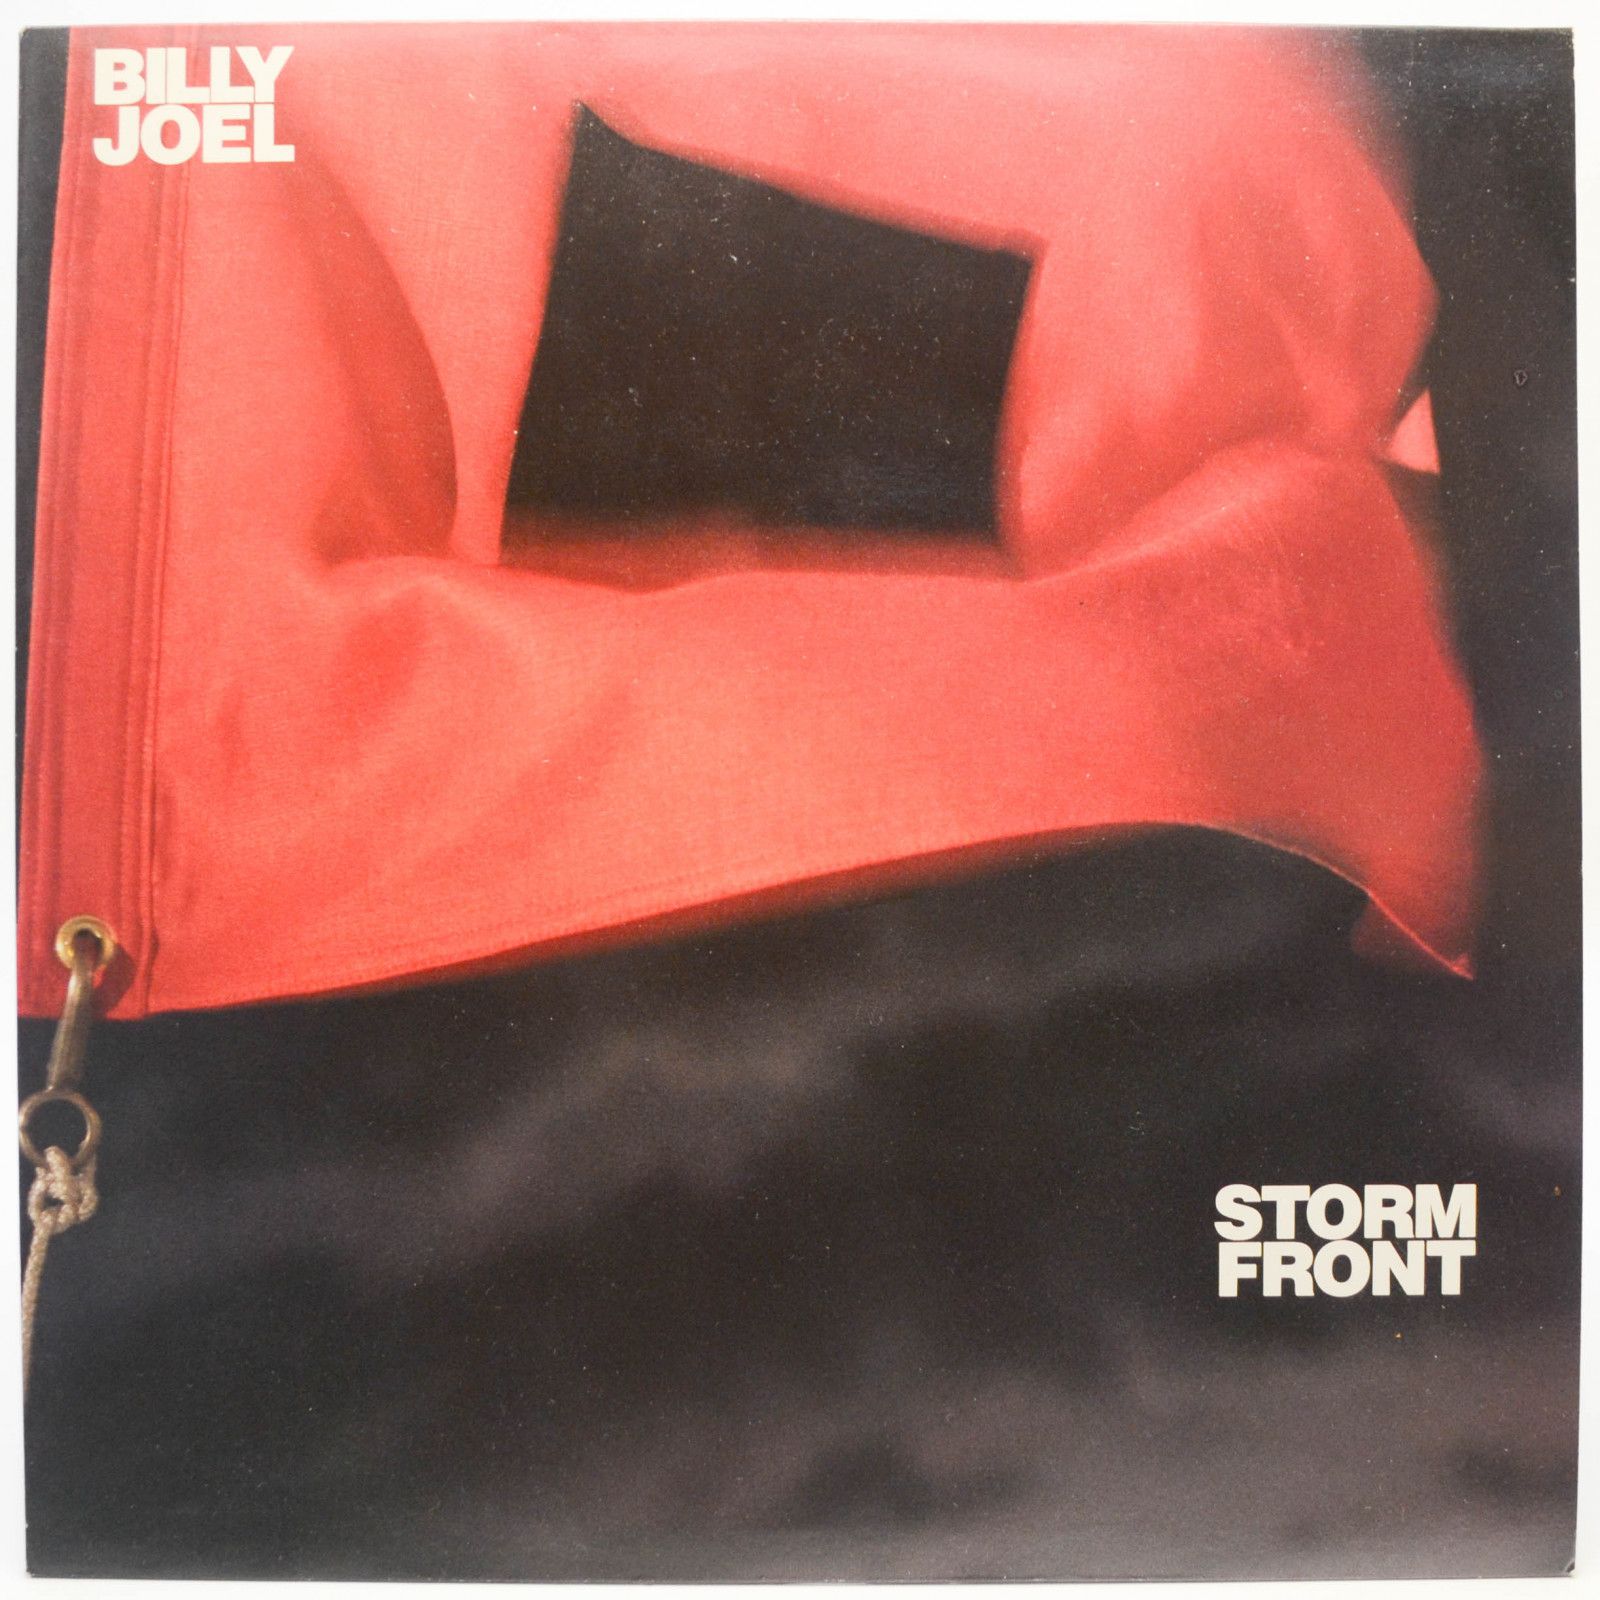 Billy Joel — Storm Front, 1989